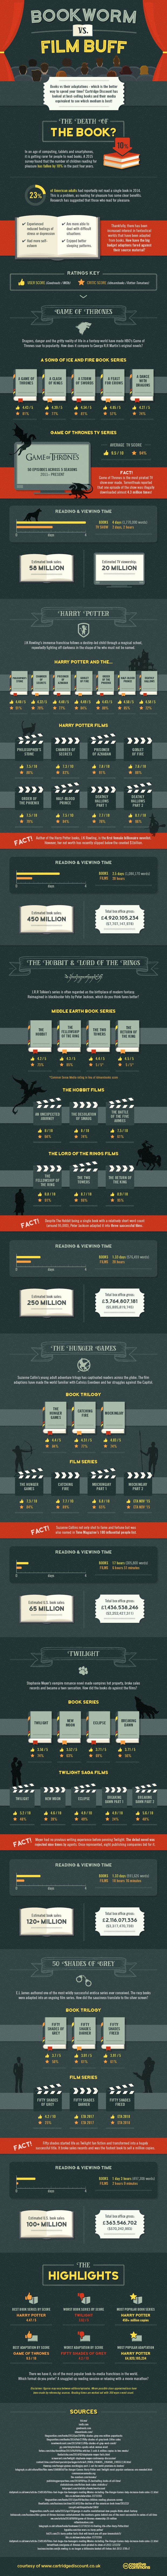 Infographie “Bookworm vs. Film Buff”infog